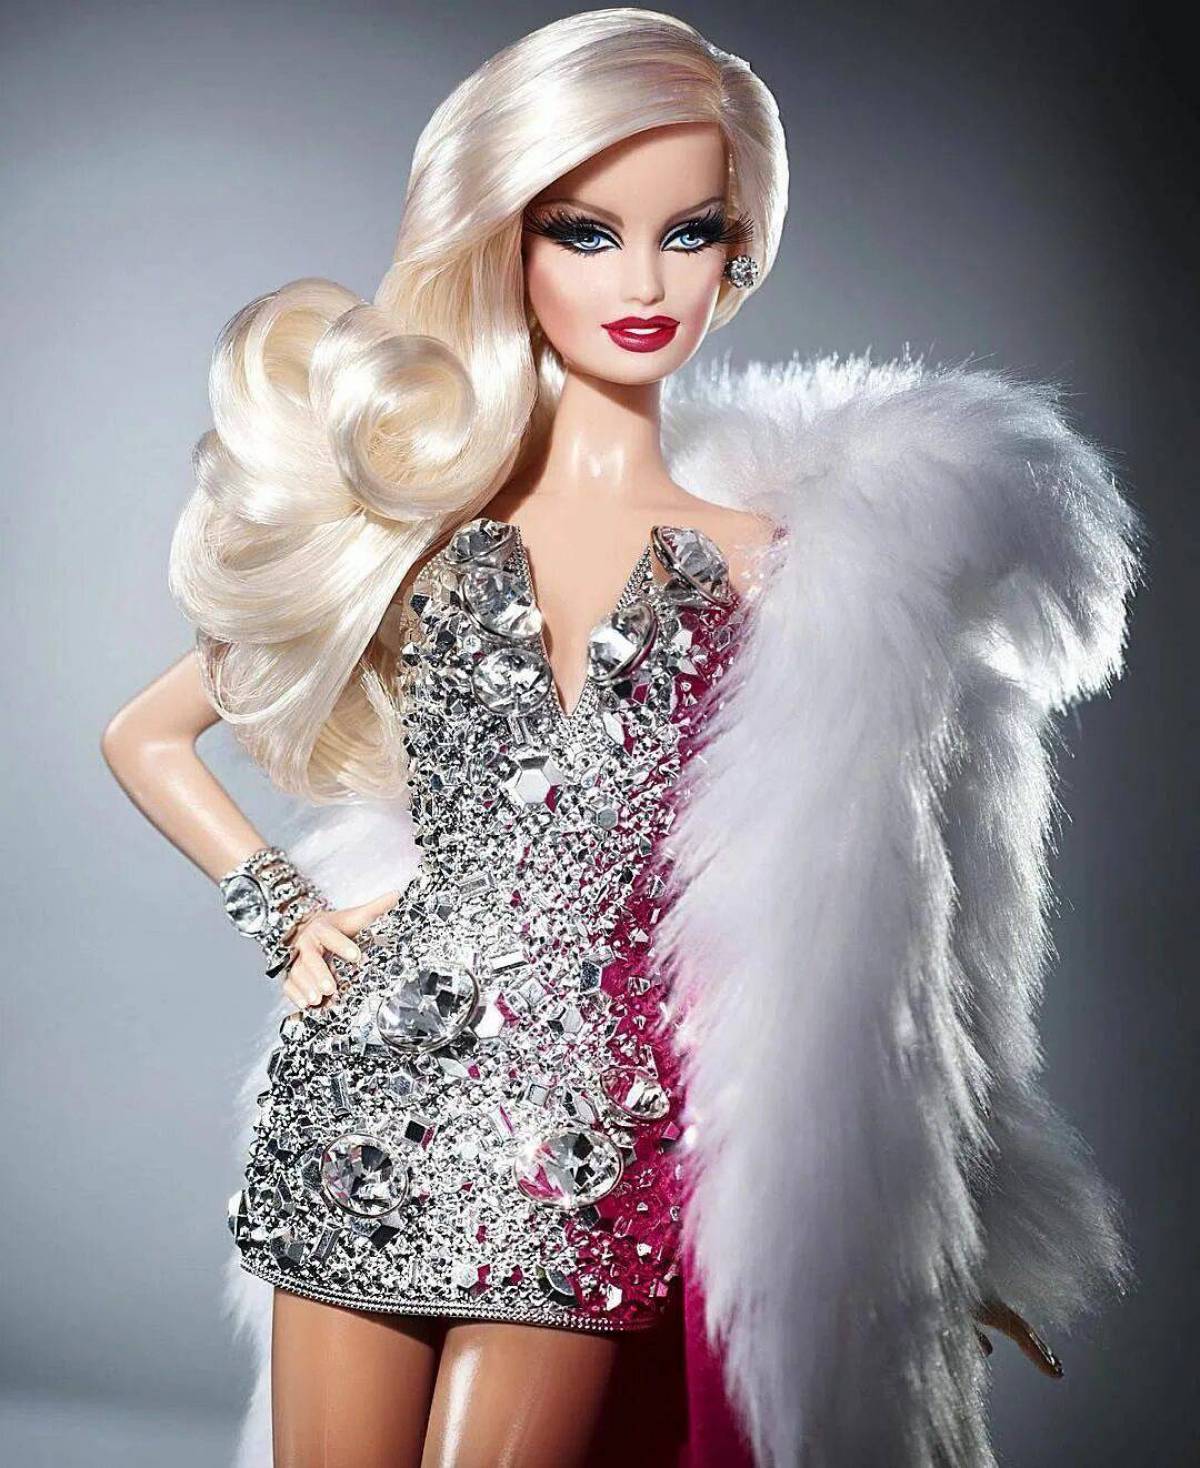 Barbie #25